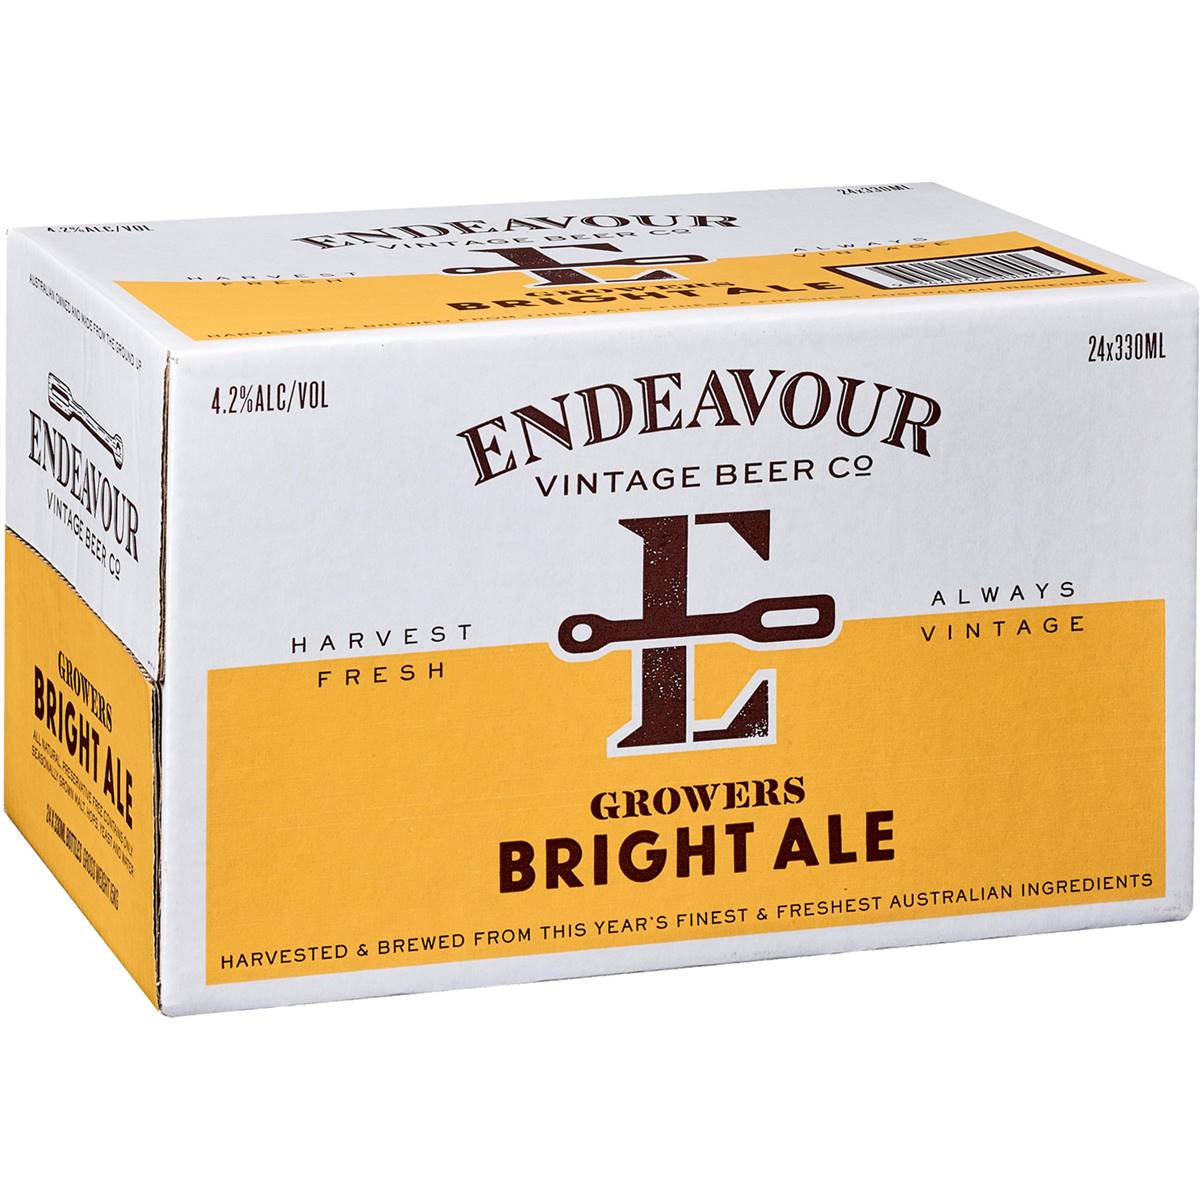 Endeavour Vintage Beer Co. Growers Bright Ale Bottles